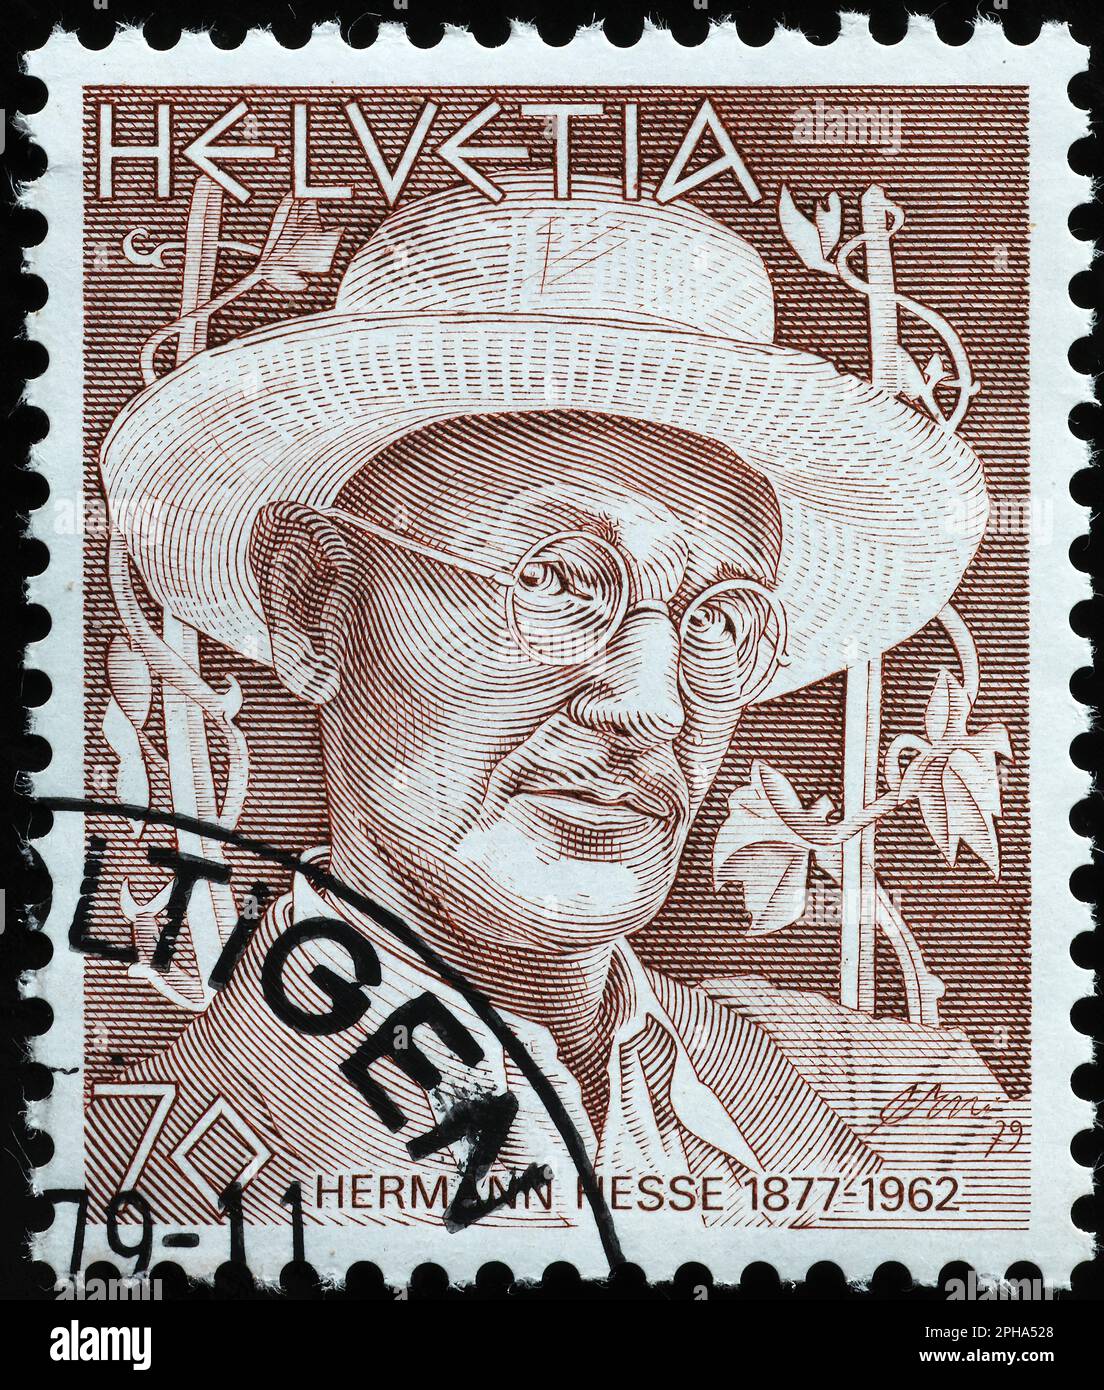 Herman Hesse portrait on swiss postage stamp Stock Photo